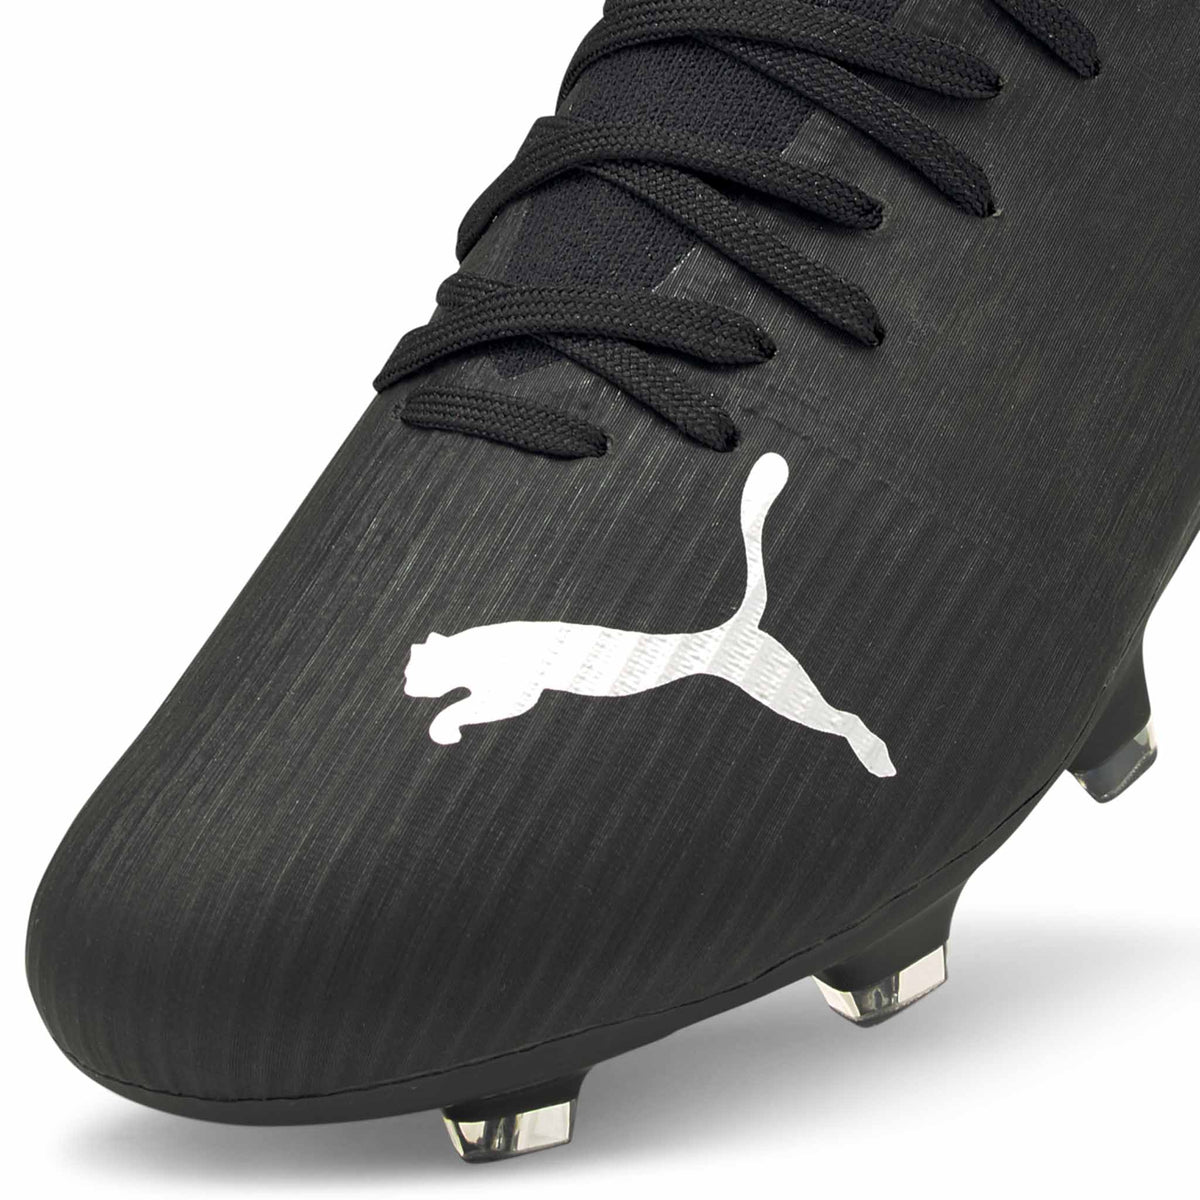 Puma Ultra 3.3 FG/AG chaussures de soccer pour adulte - Puma Black / Silver Asphalt